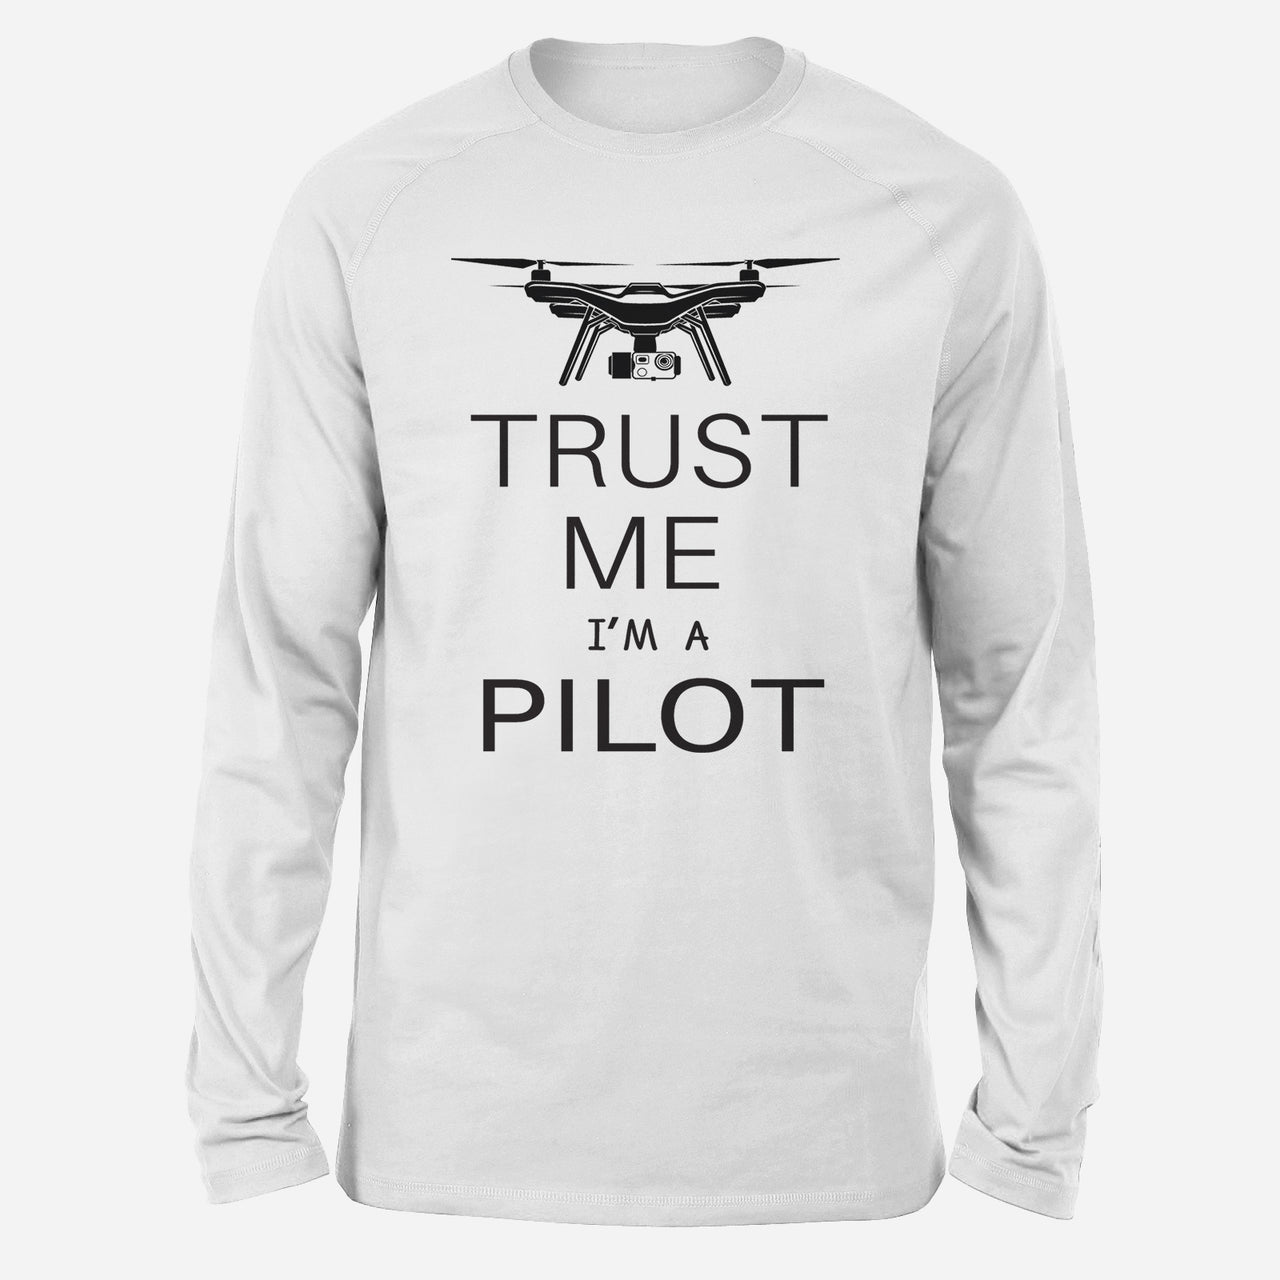 Trust Me I'm a Pilot (Drone) Designed Long-Sleeve T-Shirts